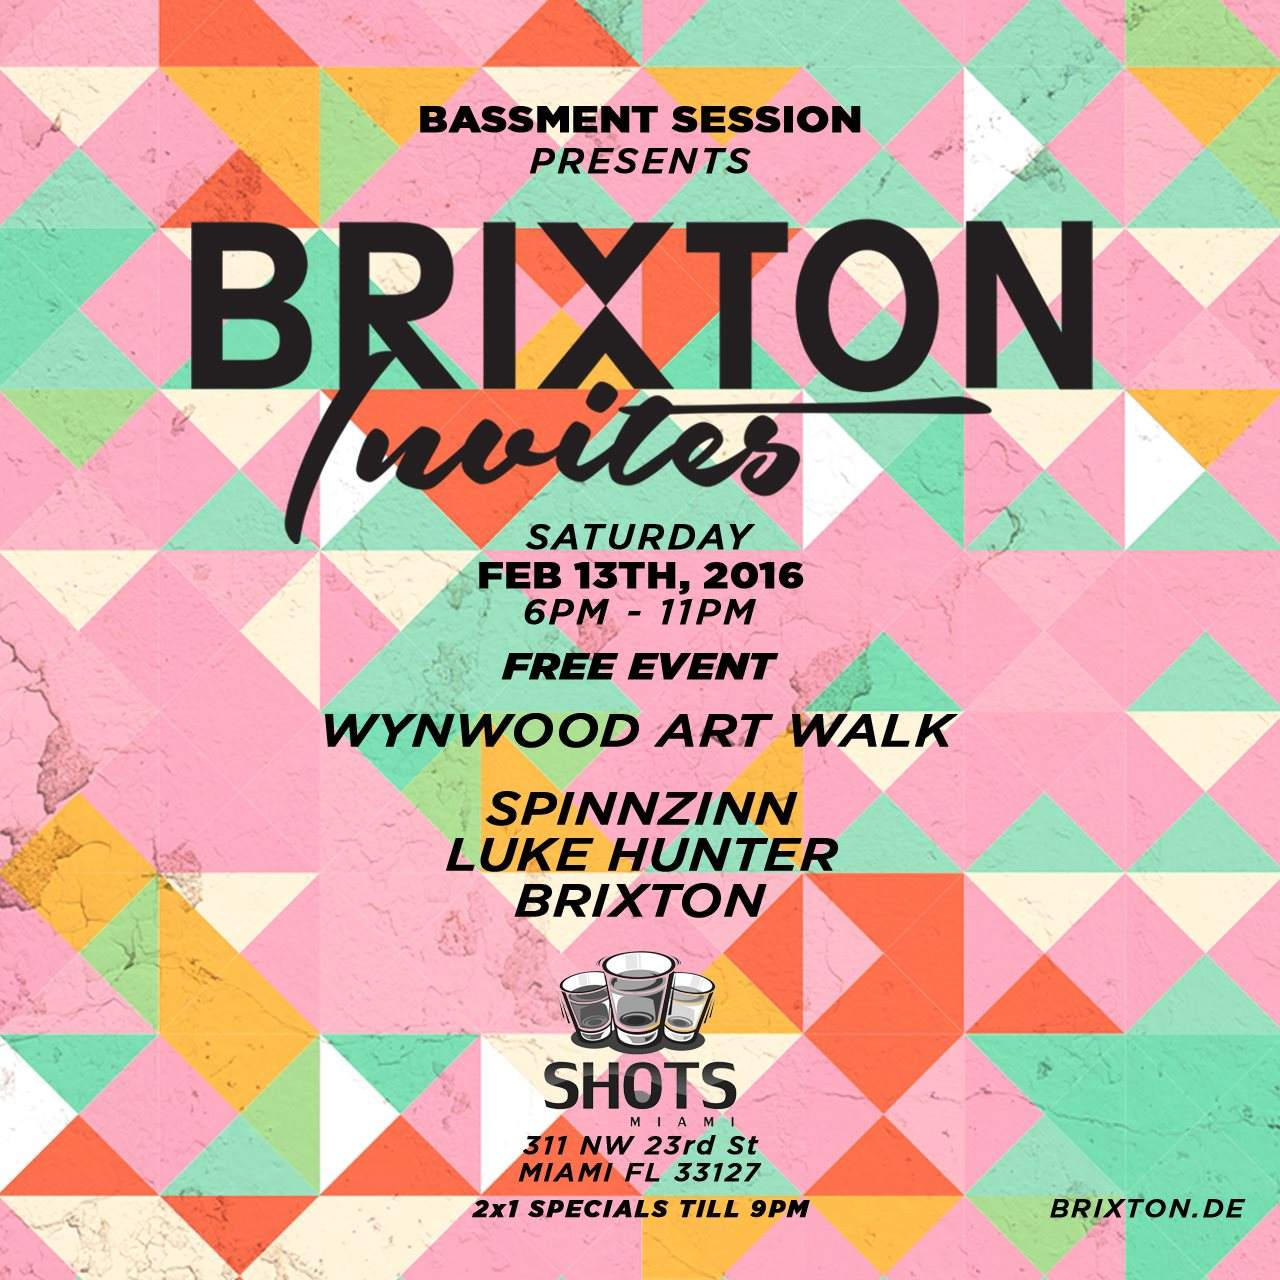 Bassment Sessions presents Brixton Invites - フライヤー裏